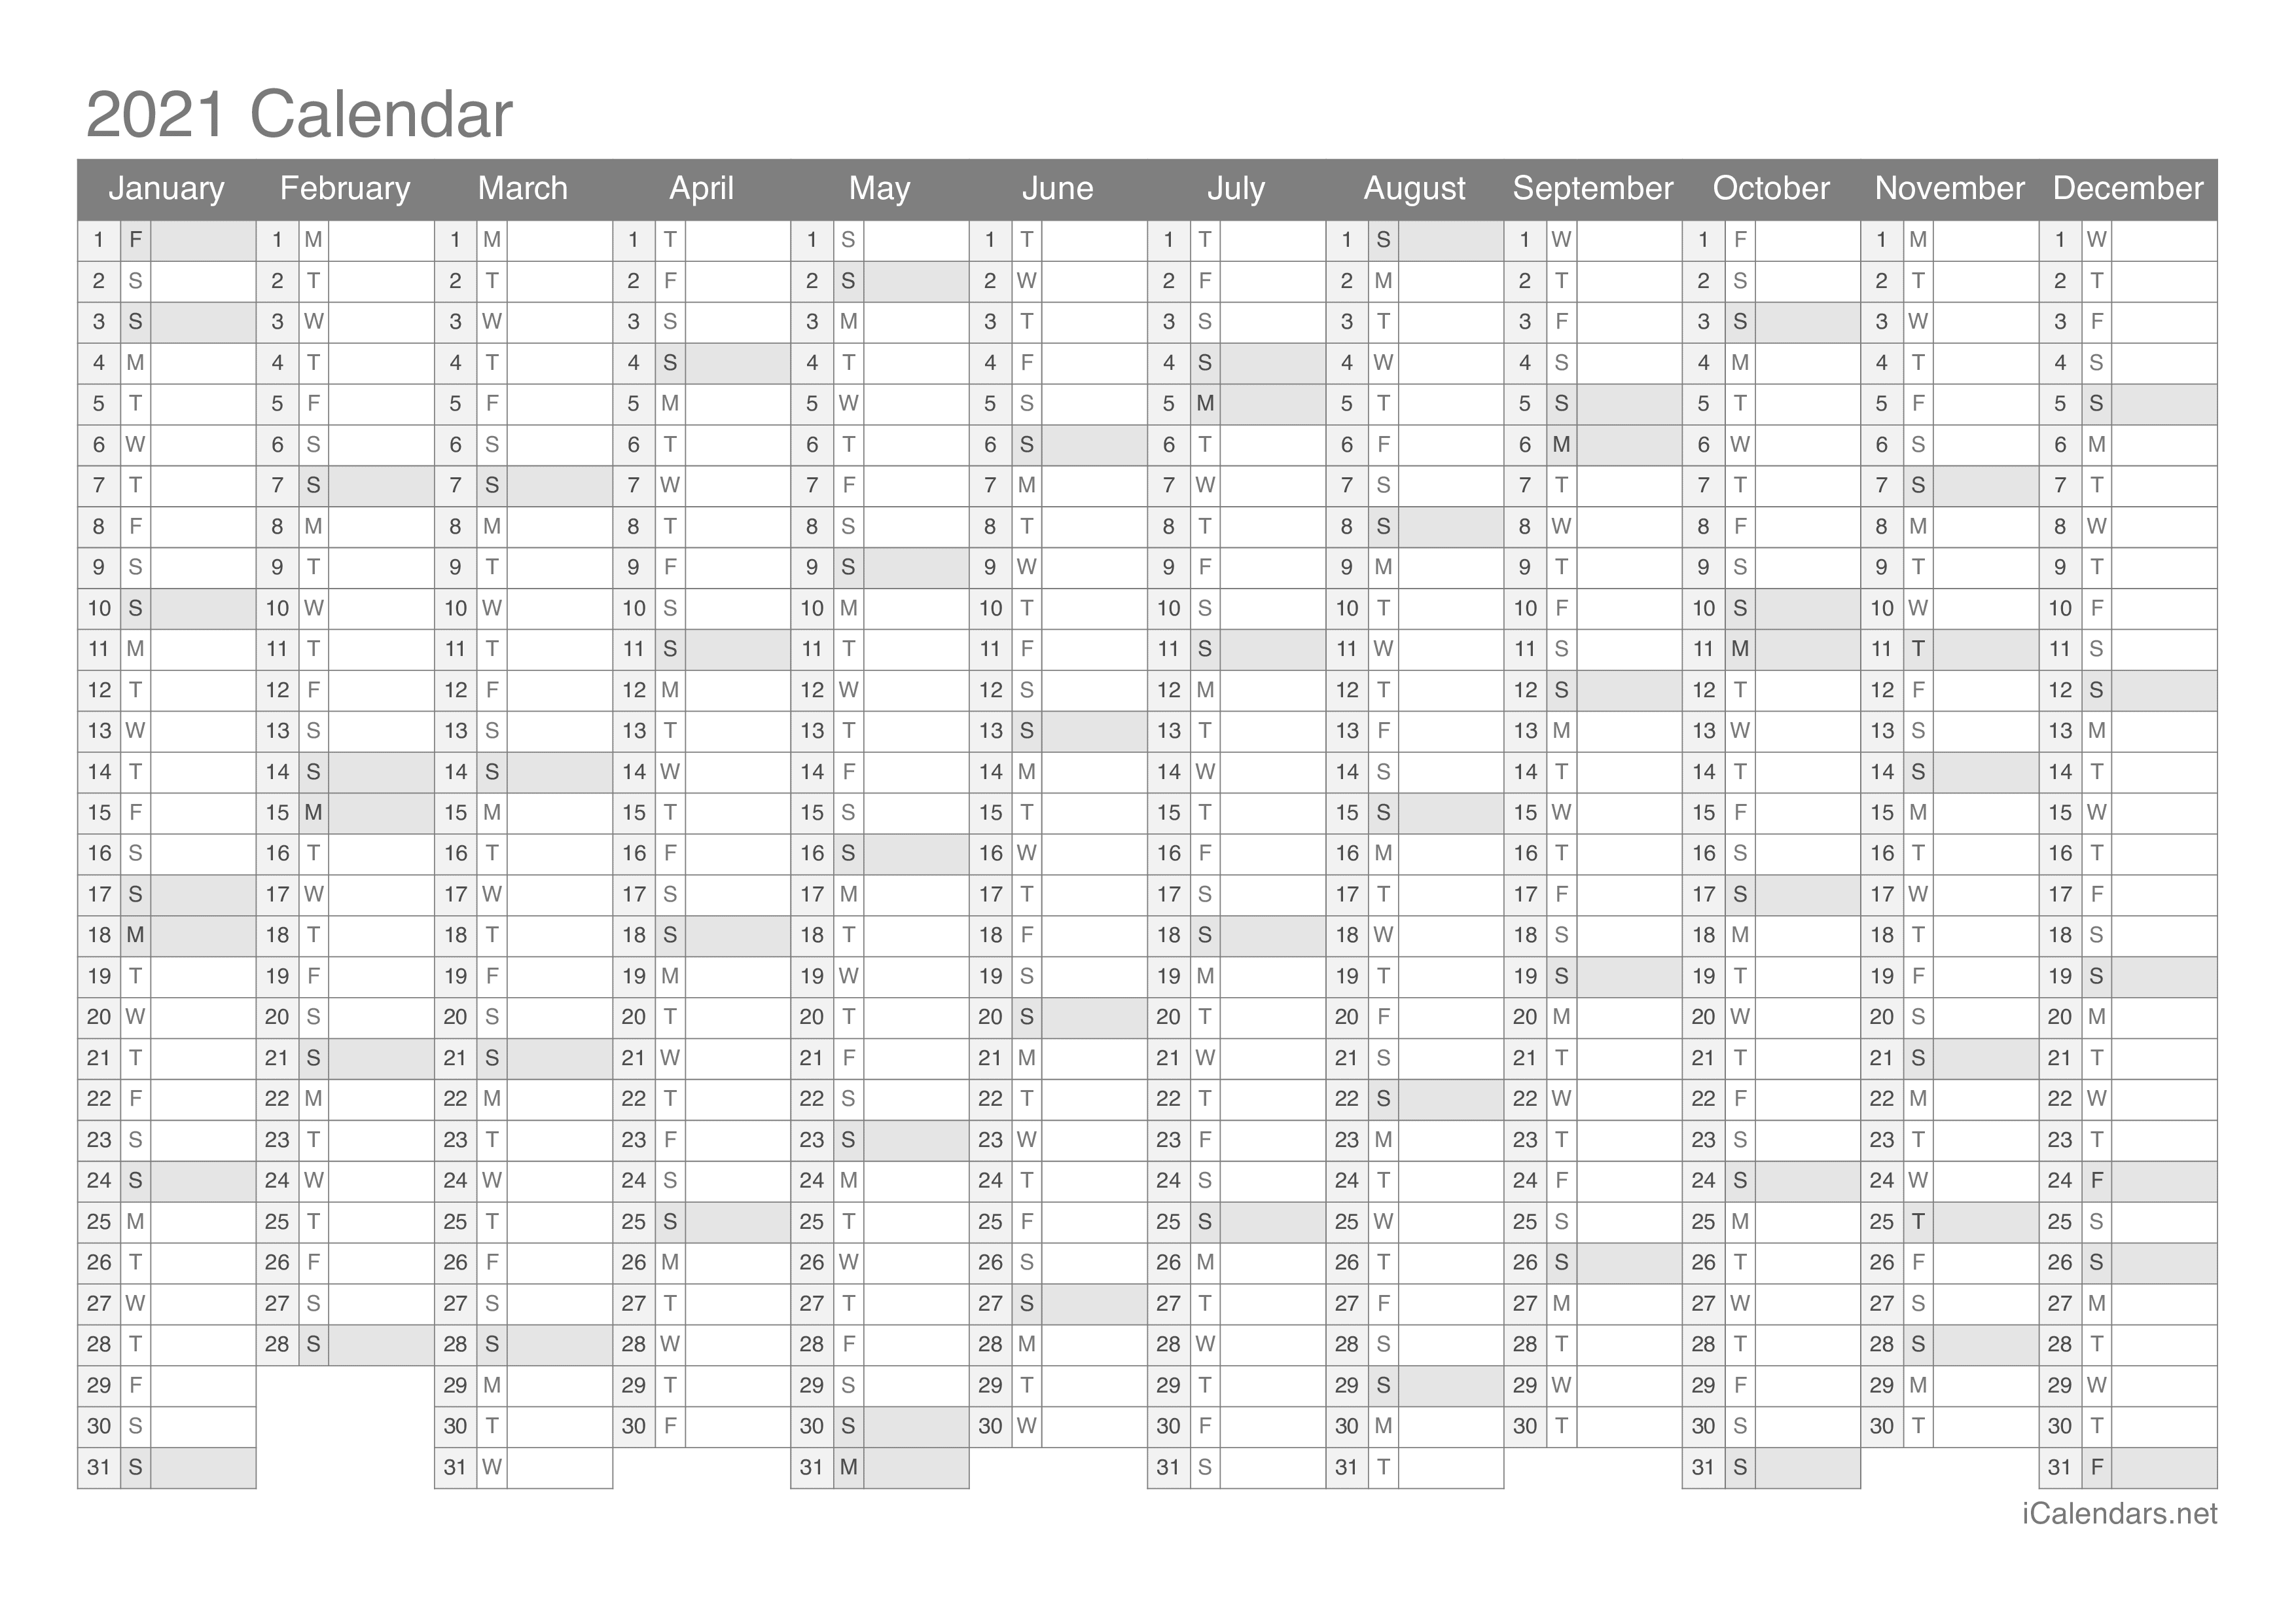 Printable Yearly Calendar 2021 2021 Printable Calendar   PDF or Excel   icalendars.net